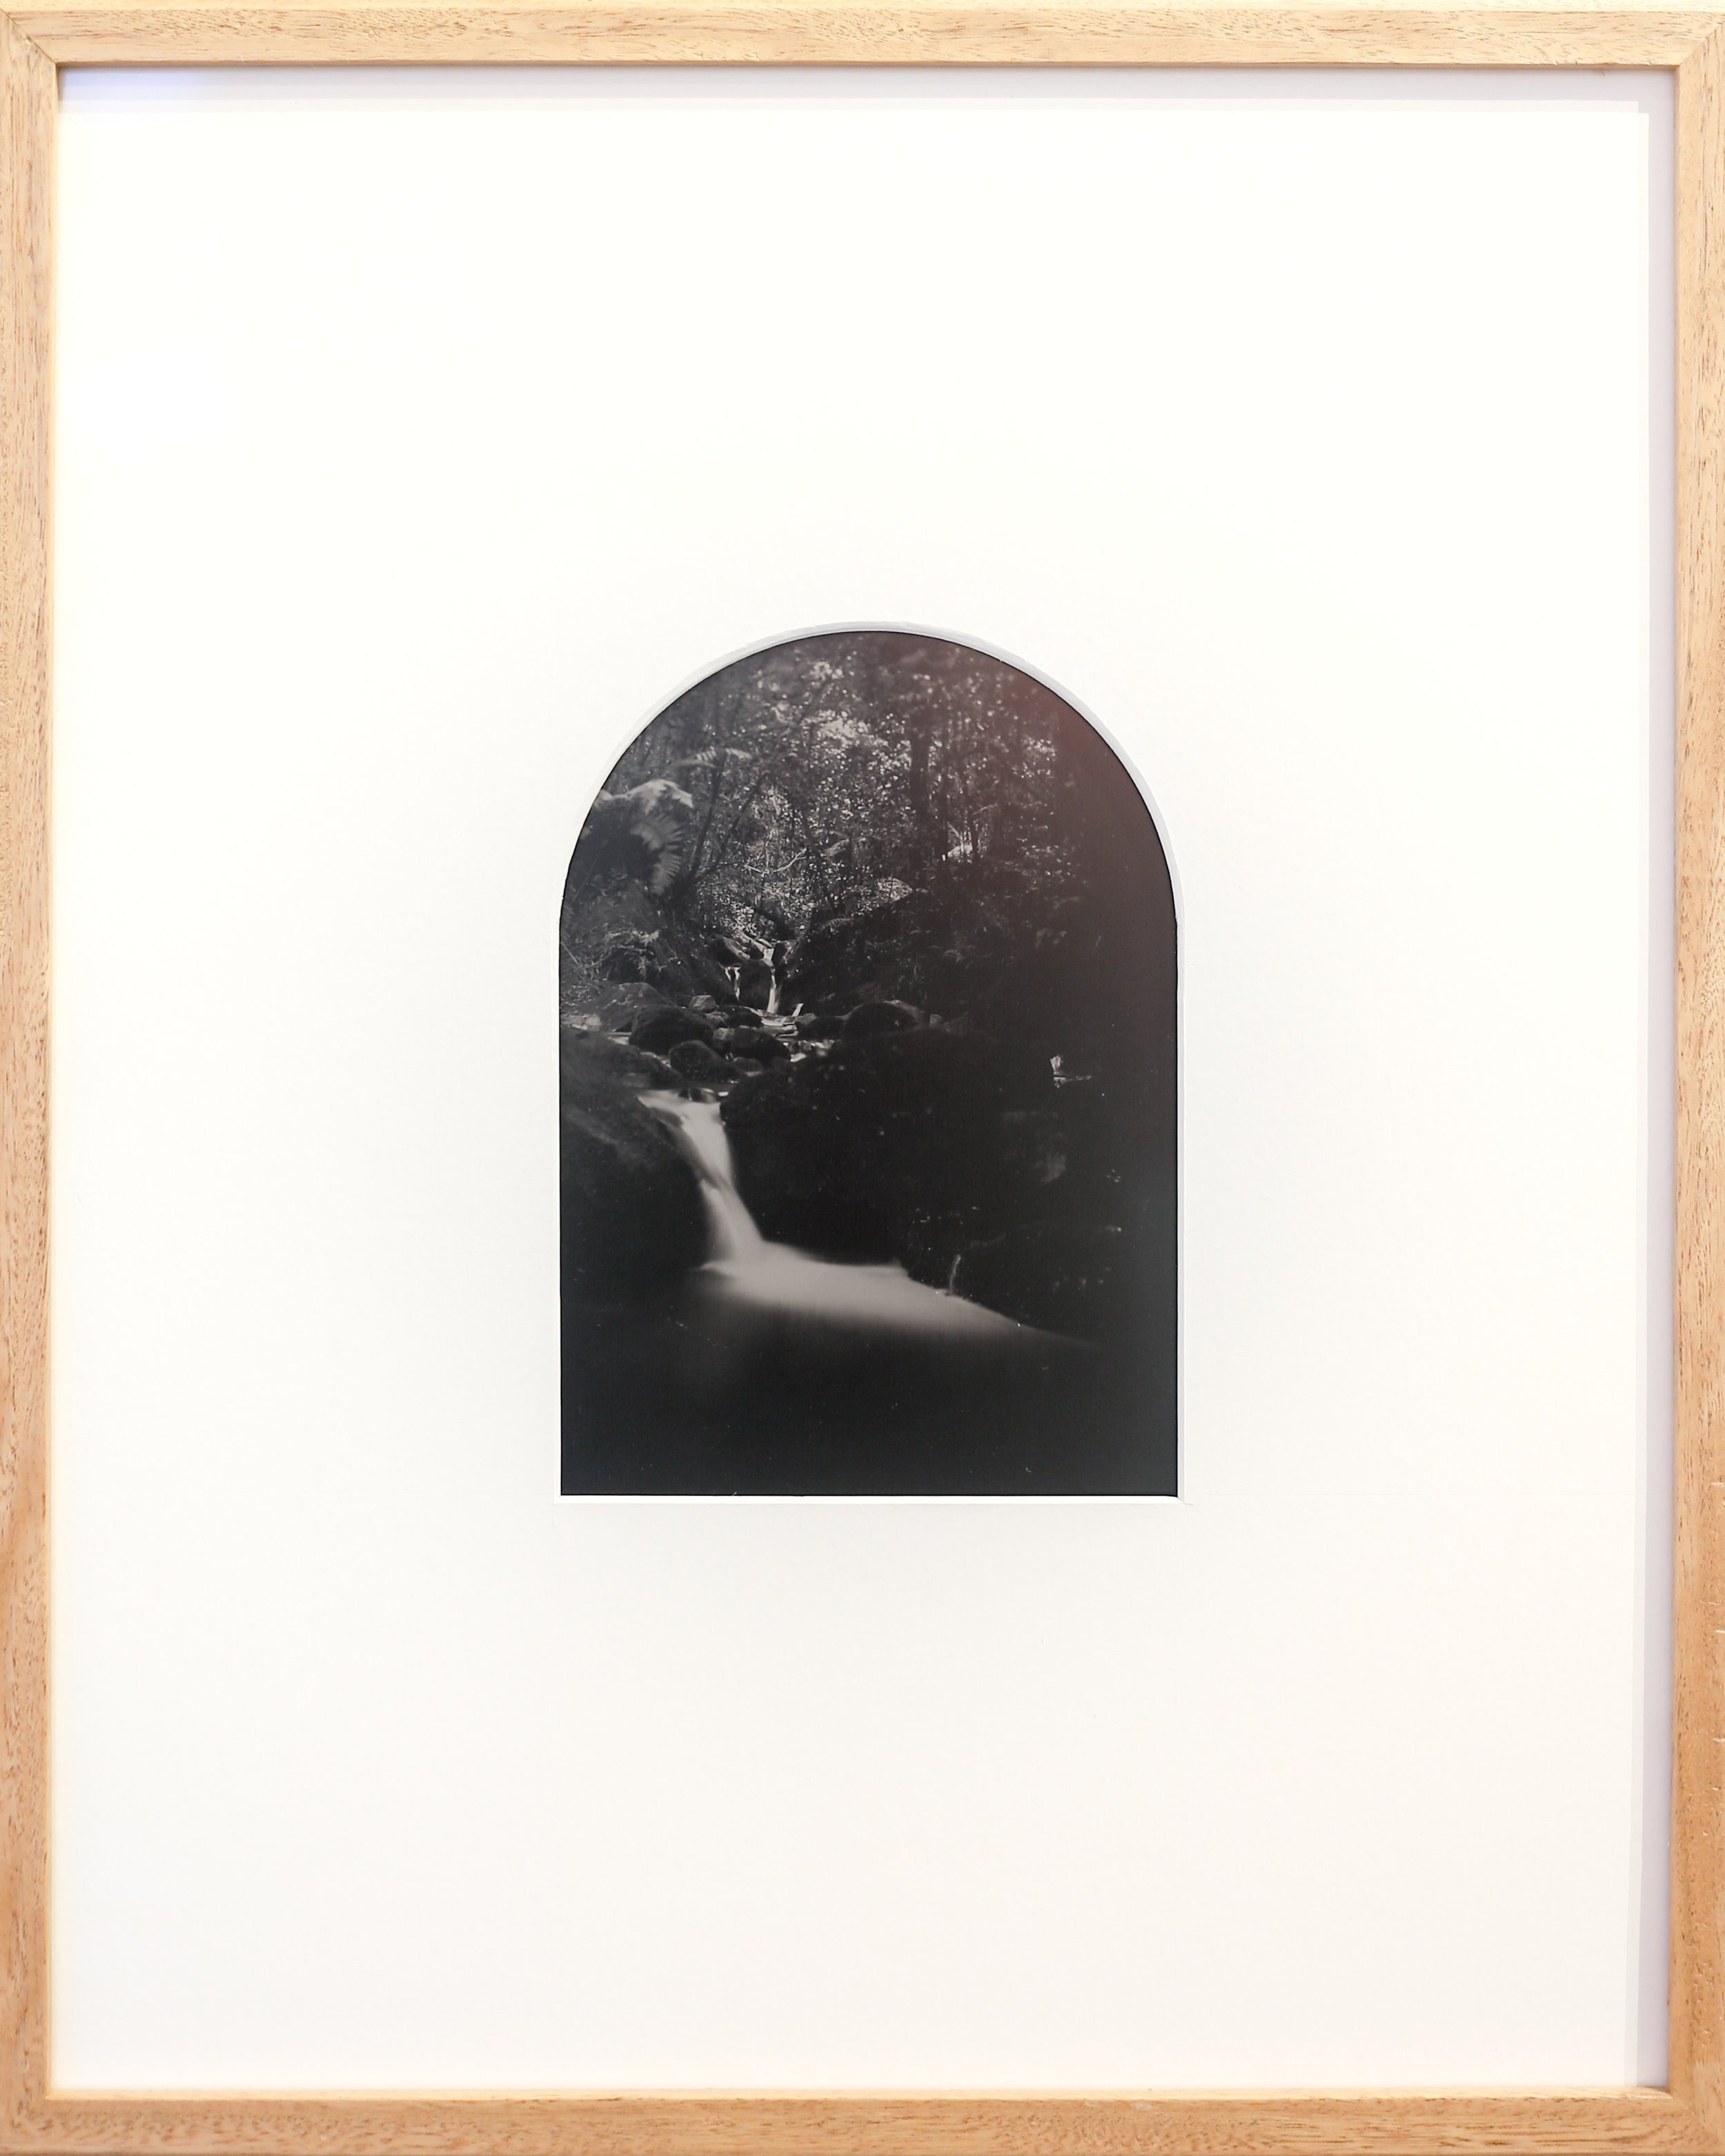   Ginin-ginin-derry I  (framed 5 x 7” tintype, 2022)  